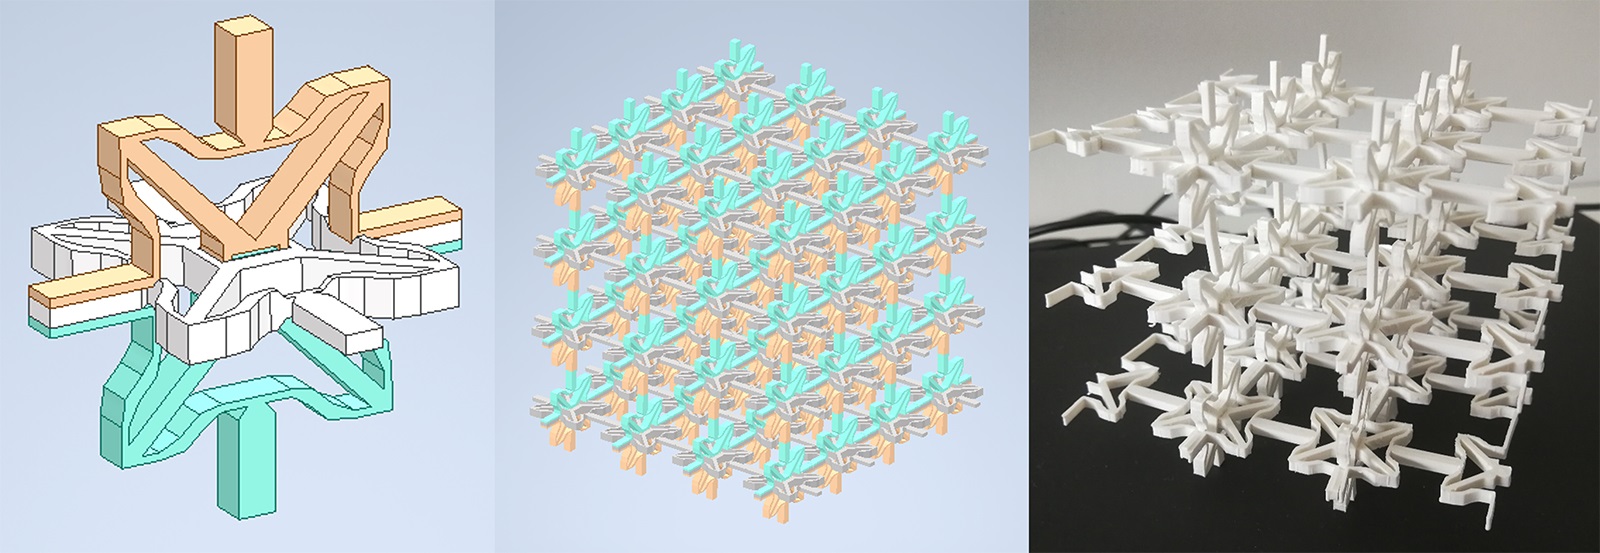 Links: Einheitszelle aus Strukturelementen,  Mitte: Aufbau des Materials aus vielen Zellen, Rechts: 3D-gedruckter Demonstrator